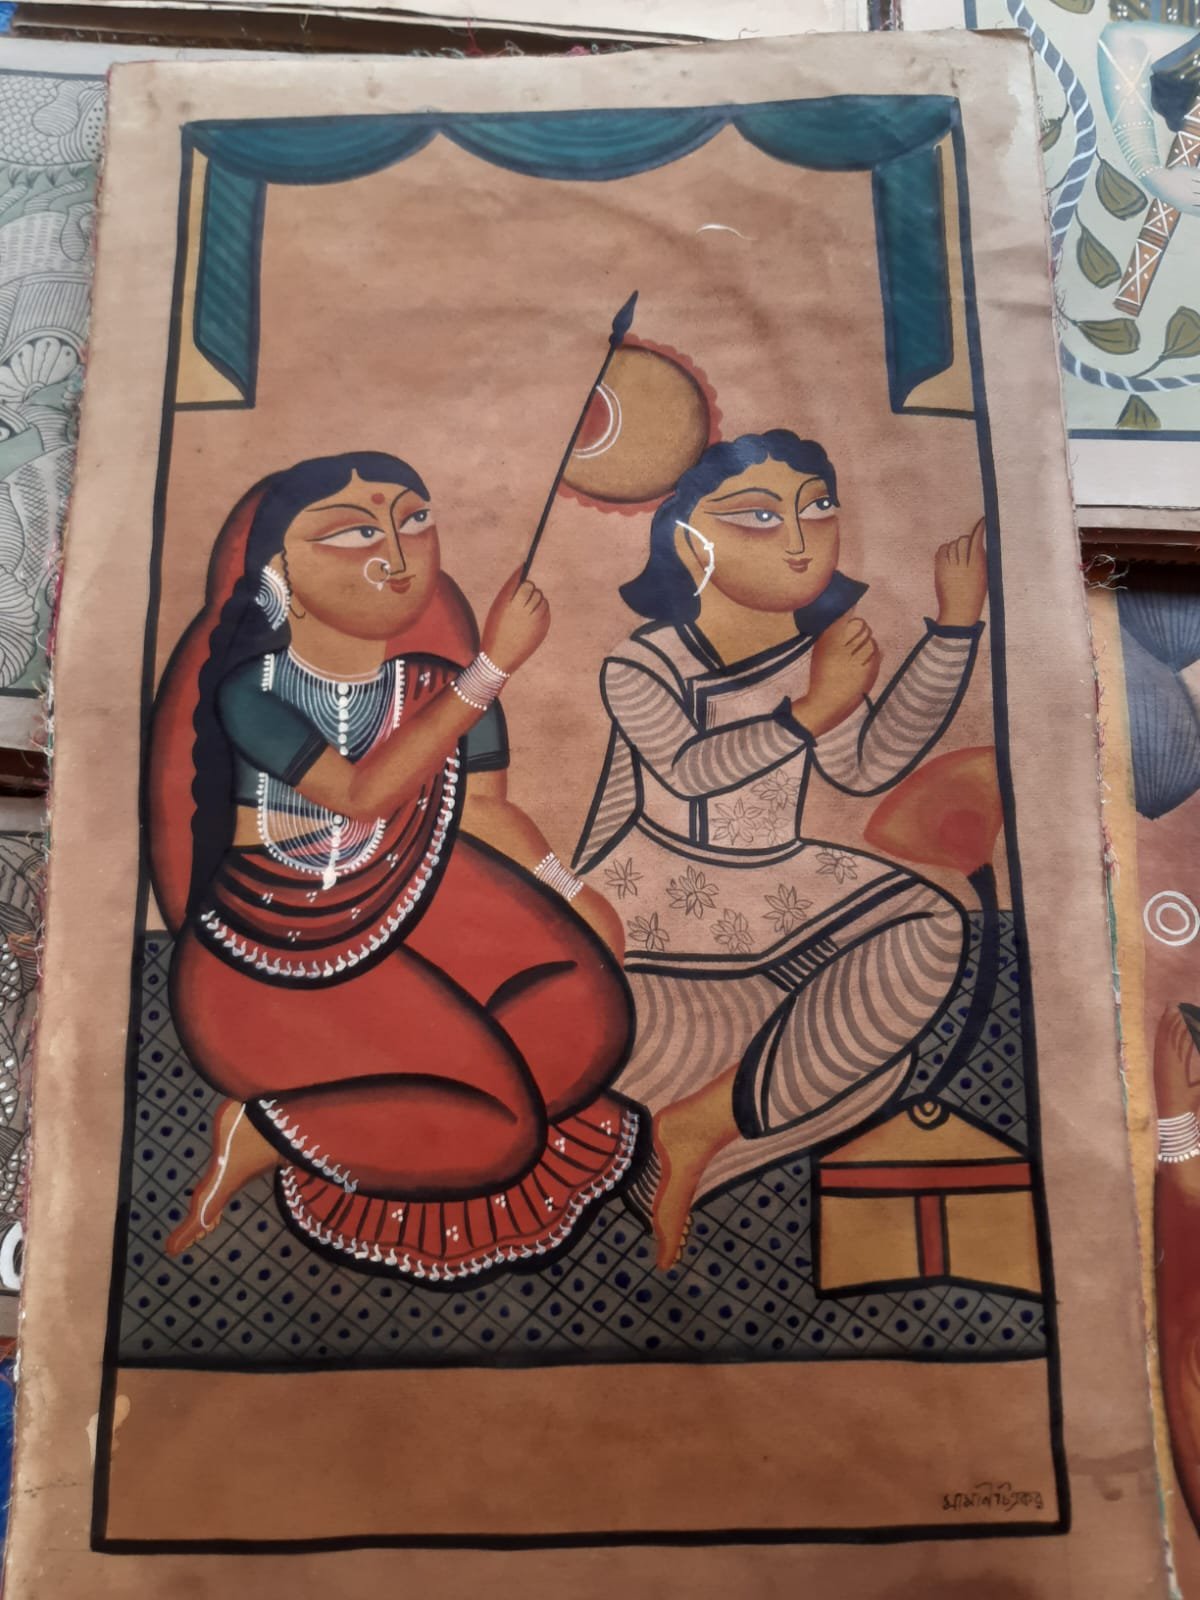 Bengal Pattachitra |Kalighat Painting